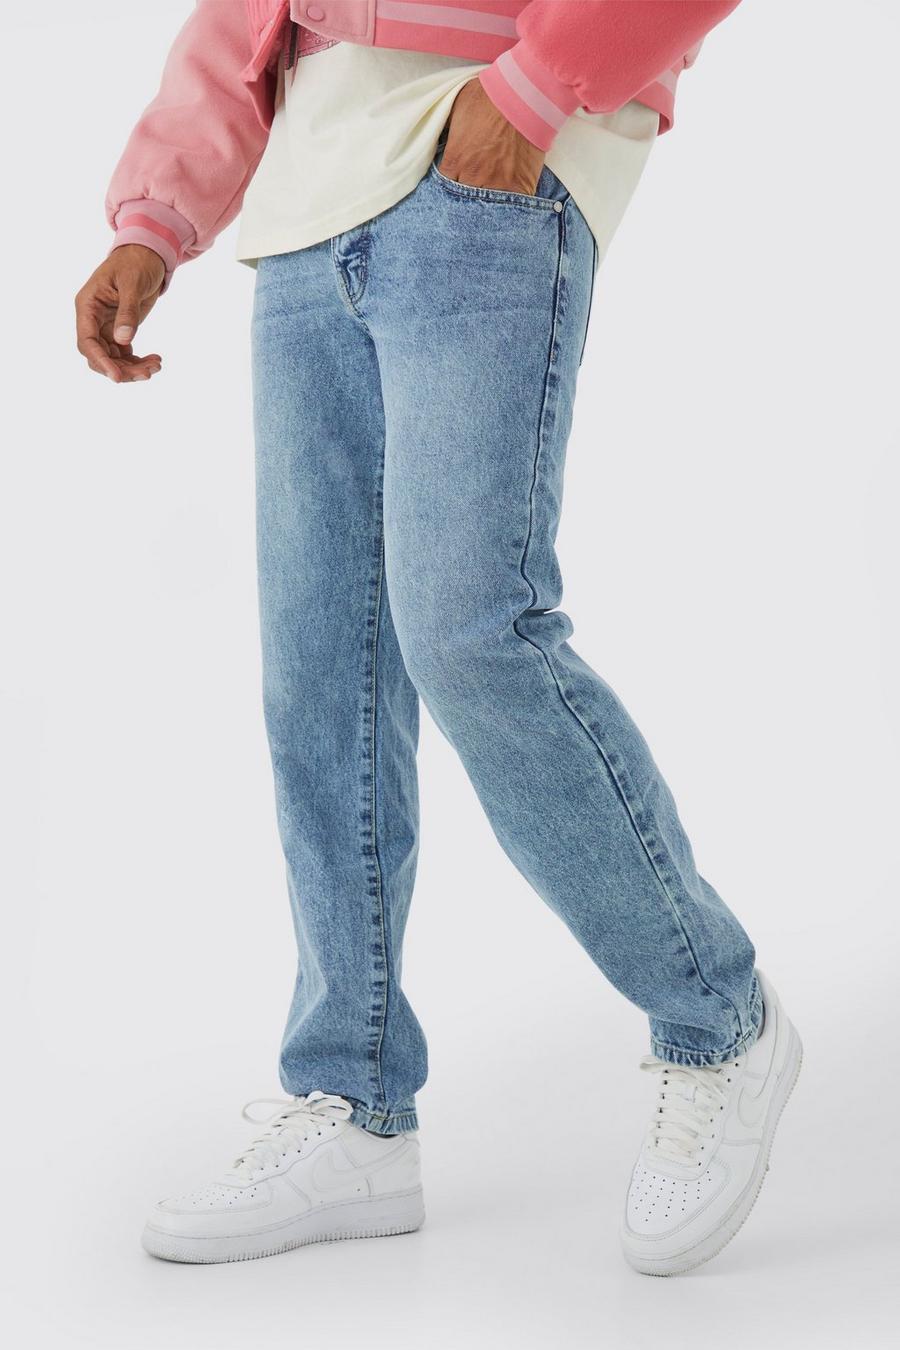 Men's Hip Hop Baggy Loose Fit Jeans Pants Skateboard Denim Trousers Wide  Leg New